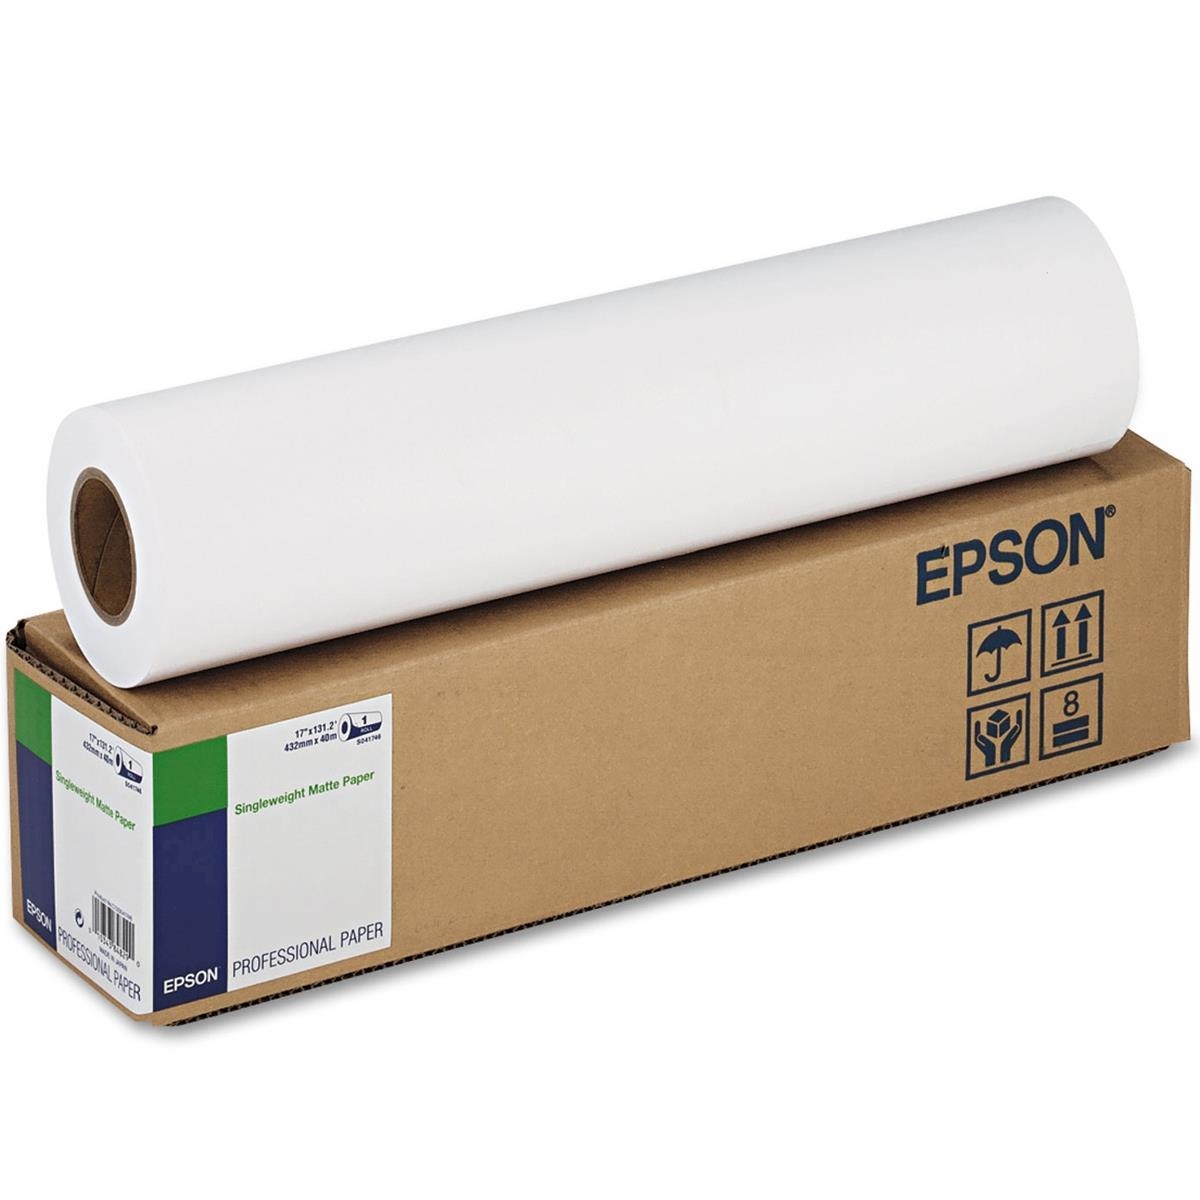 Original Epson S041746 120gsm 17in x 131ft Paper Roll (C13S041746)